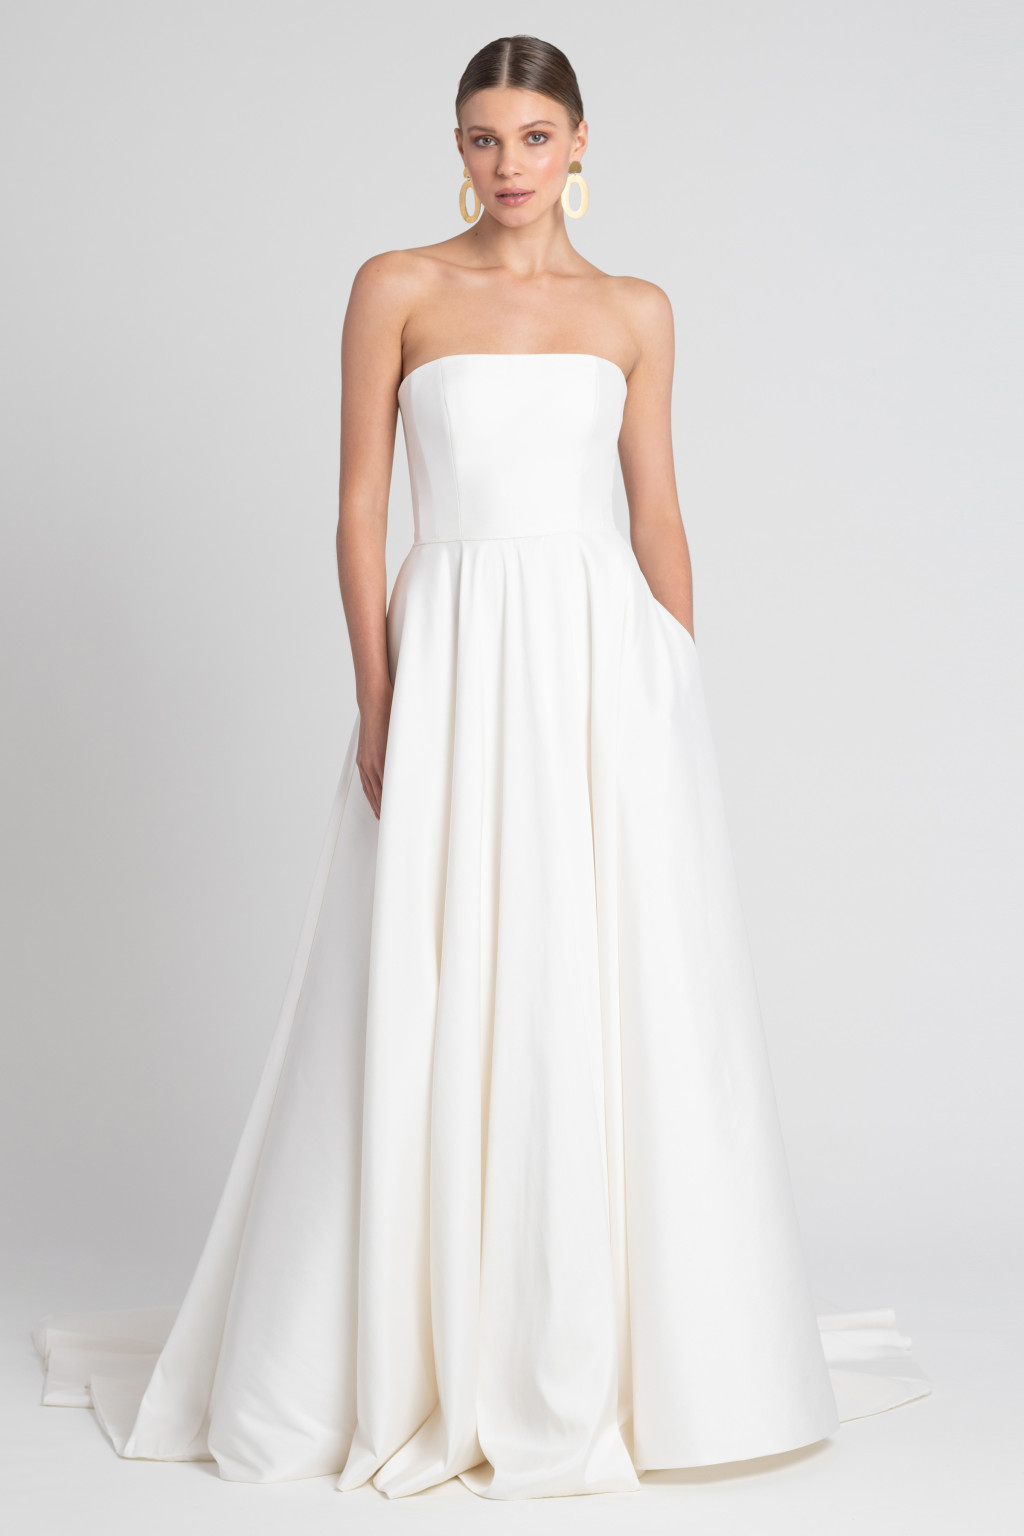 Jenny_Yoo_Brynn_Wedding_Dress_Strapless_A_Line_front_2400x3600